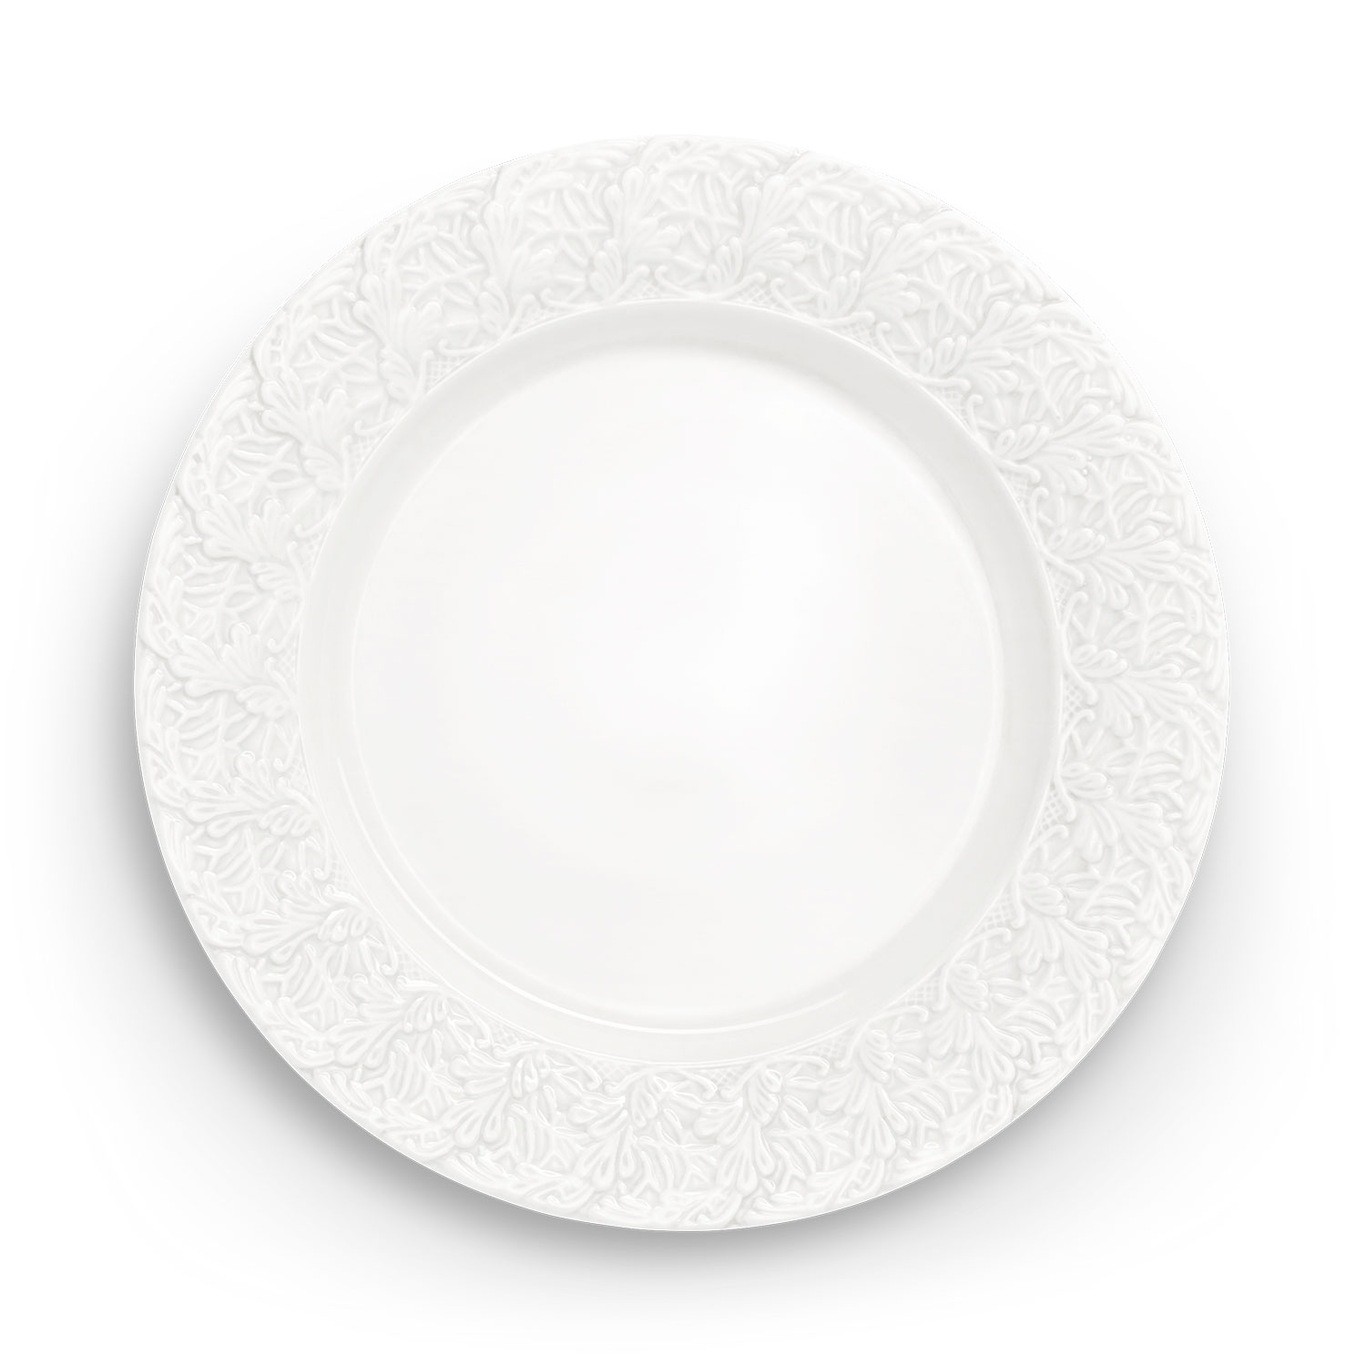 Lace Plate 25 cm, White